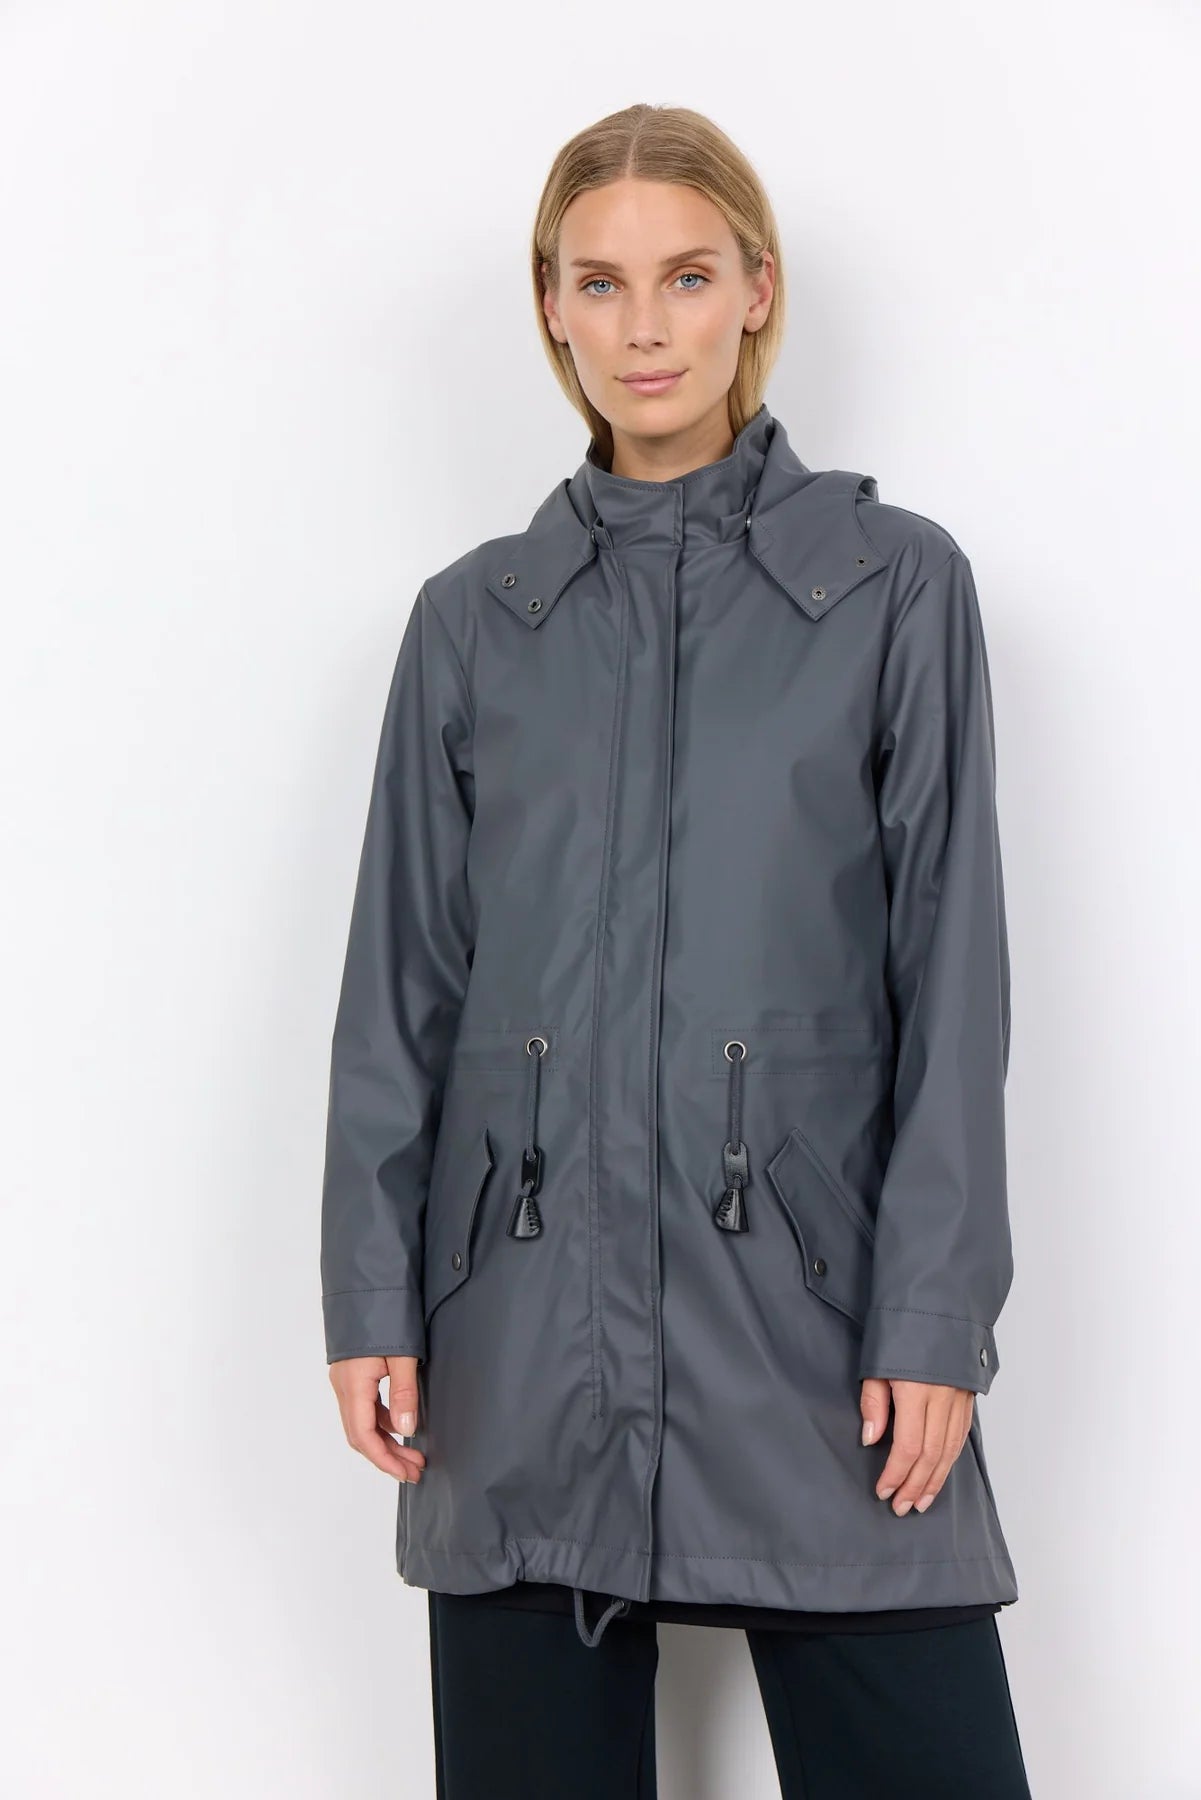 Soya Concept Alexa Iron Grey Raincoat